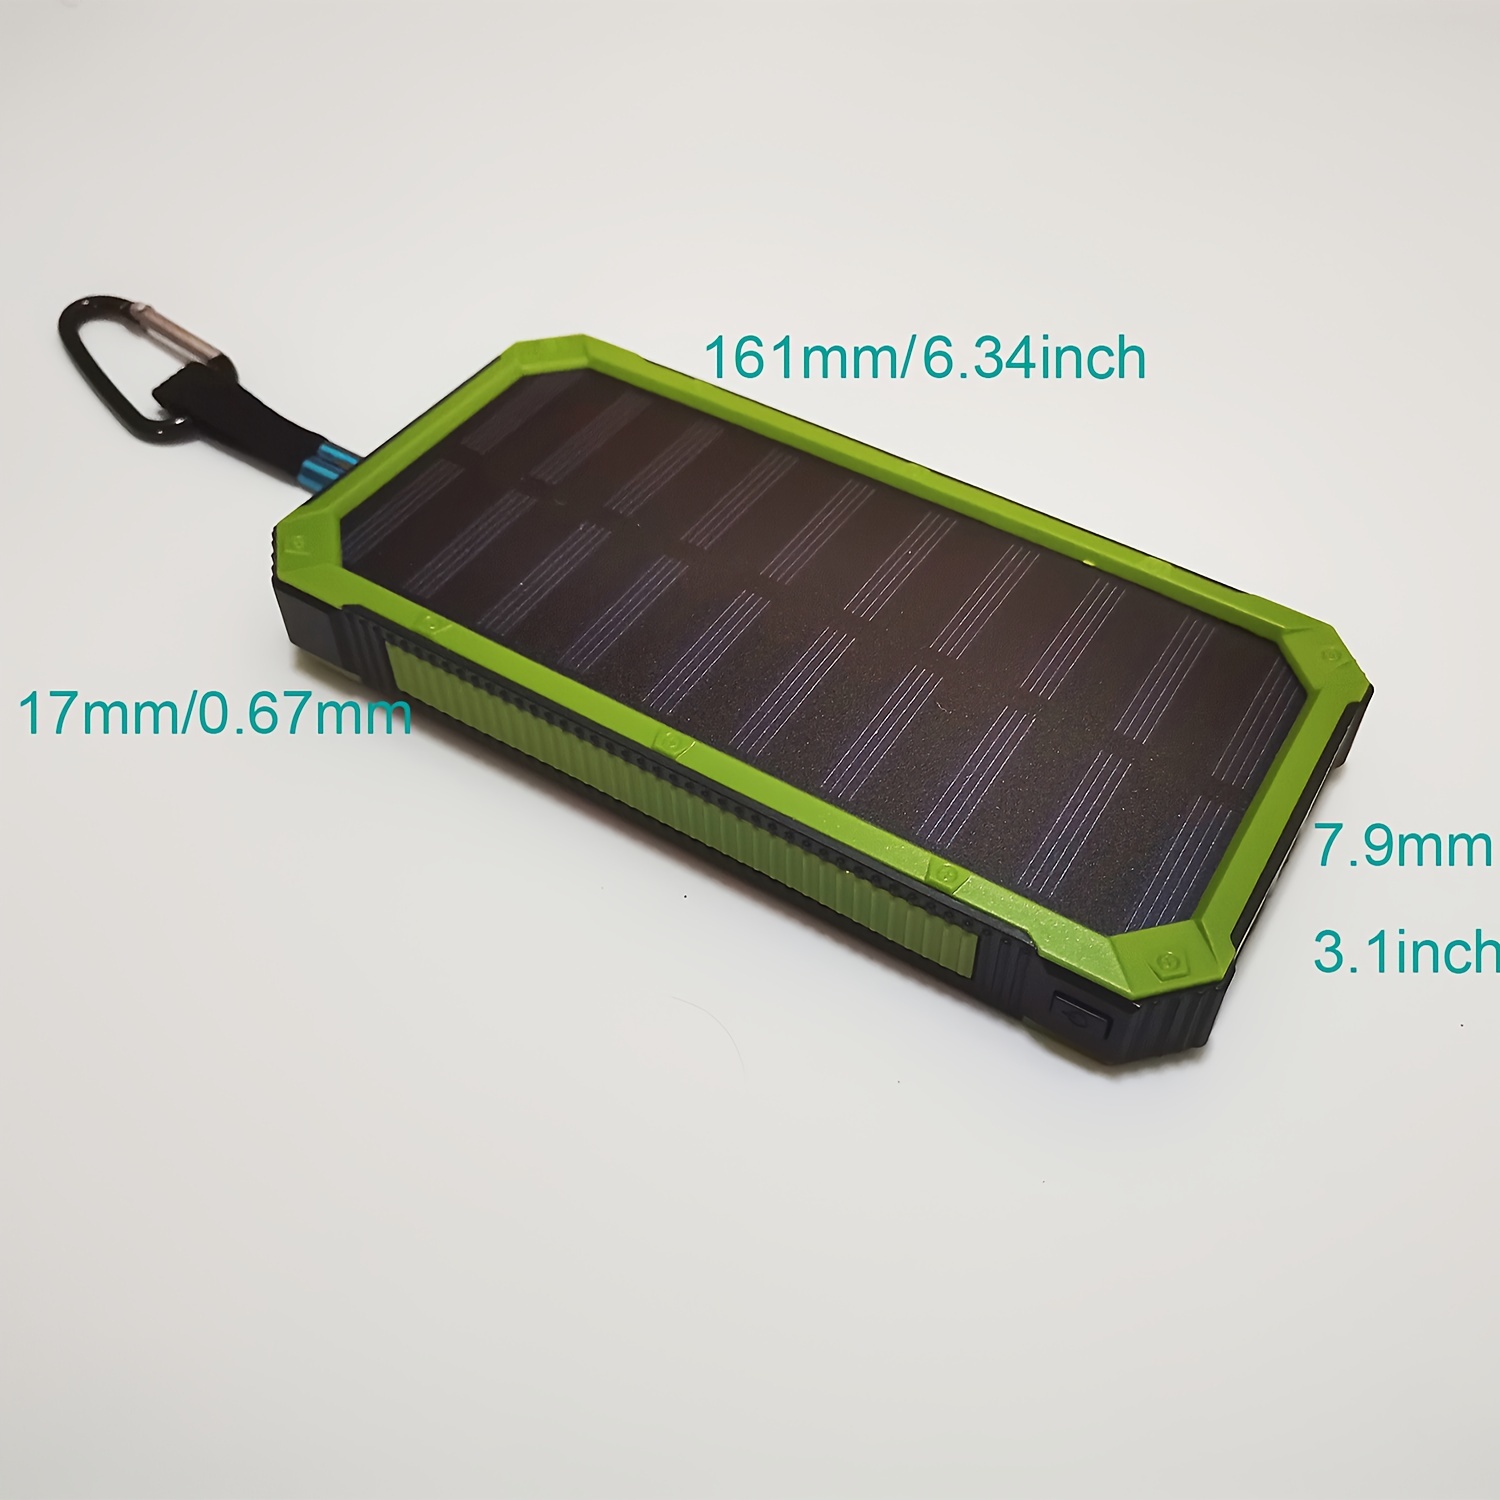 20000mAh Cargador Mini Solar Portatil Para Celular Bateria Externa